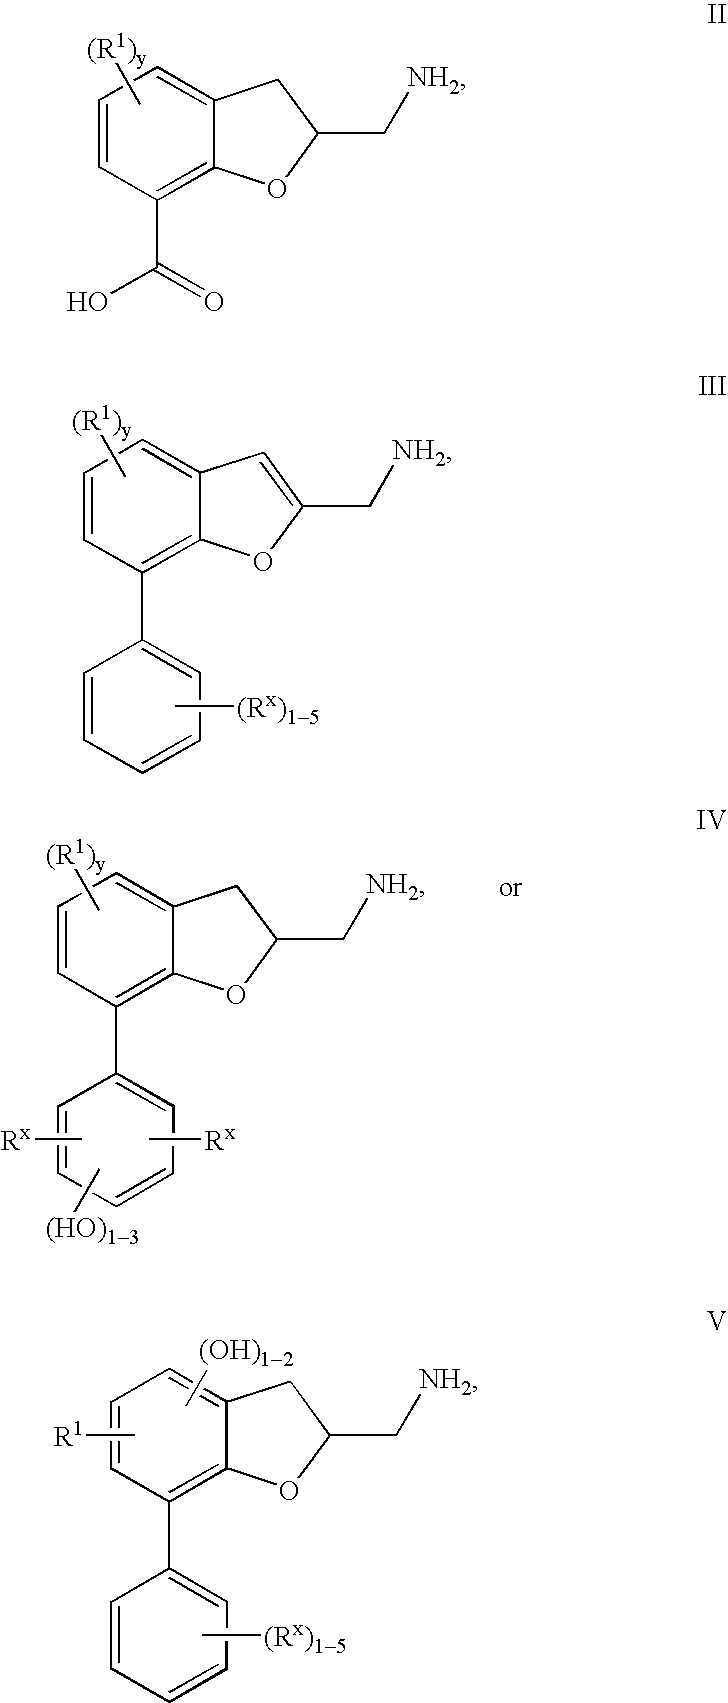 Dihydrobenzofuran derivatives and uses therof